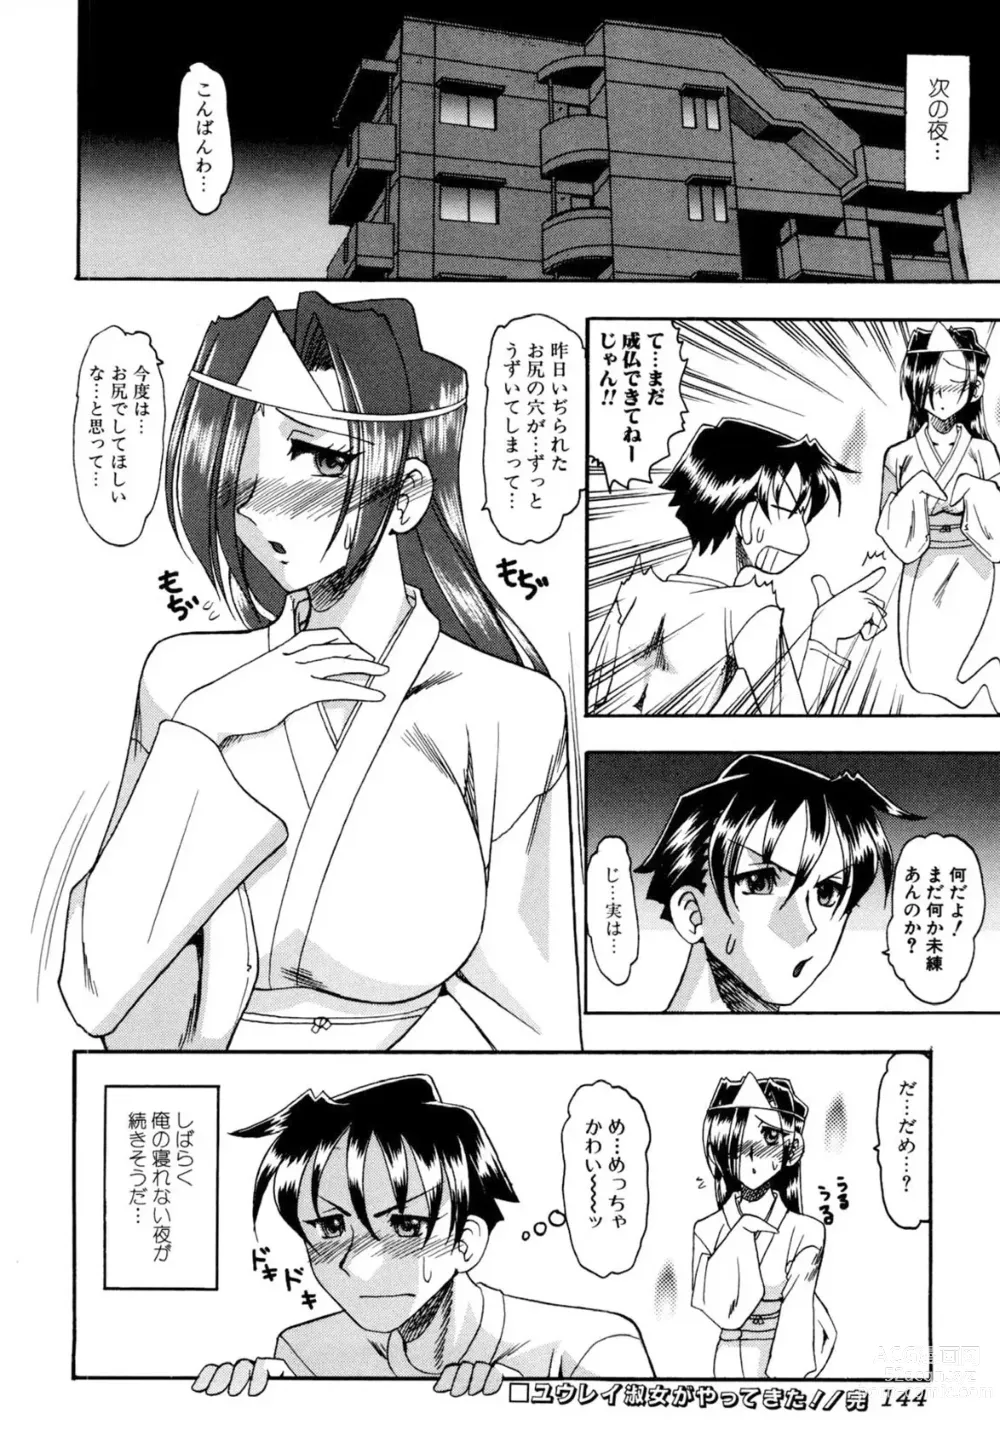 Page 143 of manga Mizugism